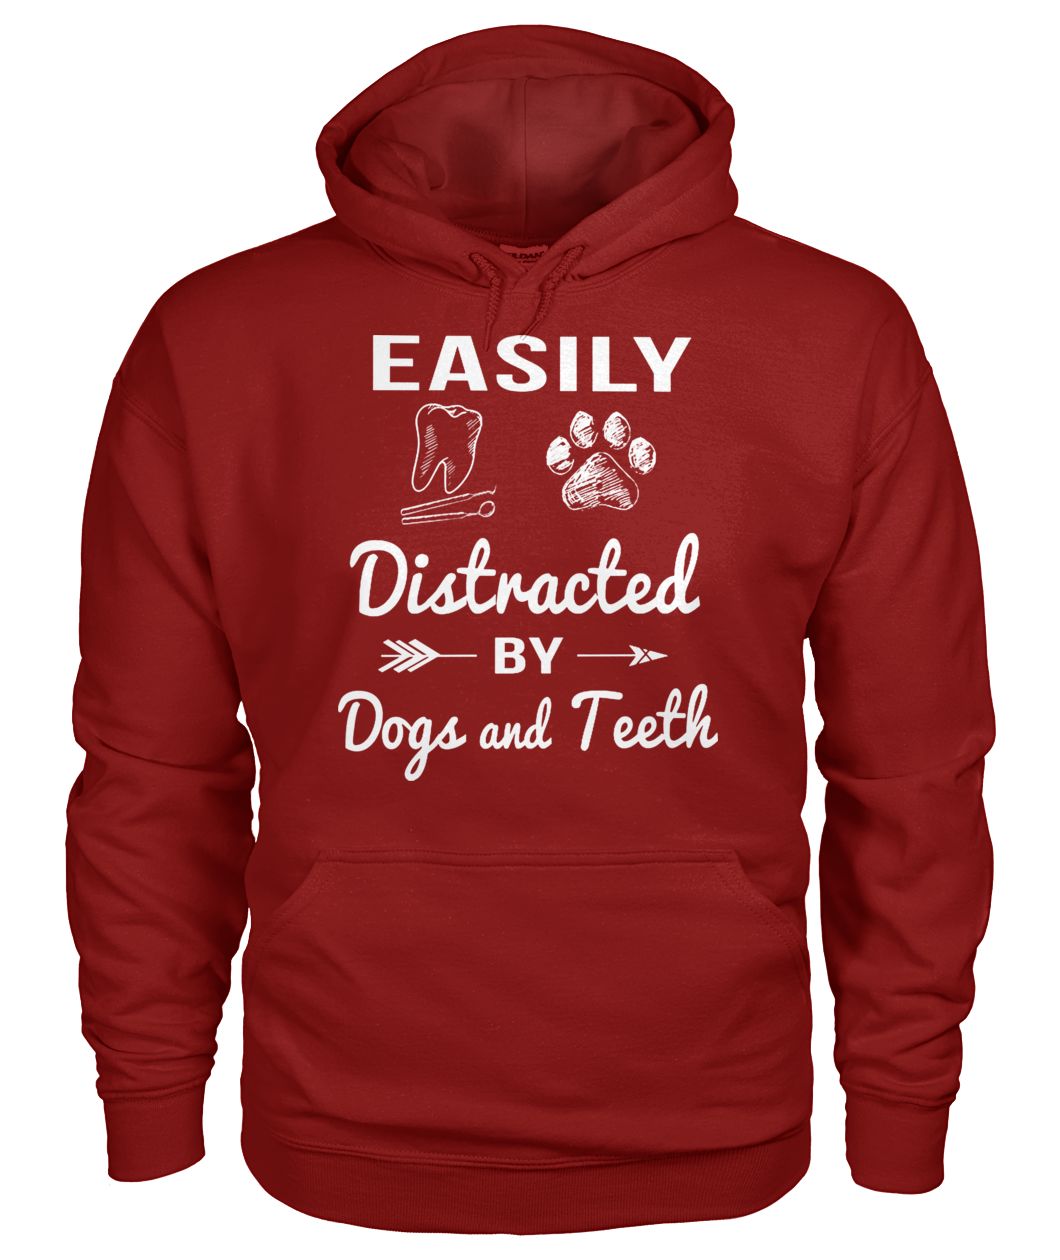 Easily distracted by dogs and teeth gildan hoodie